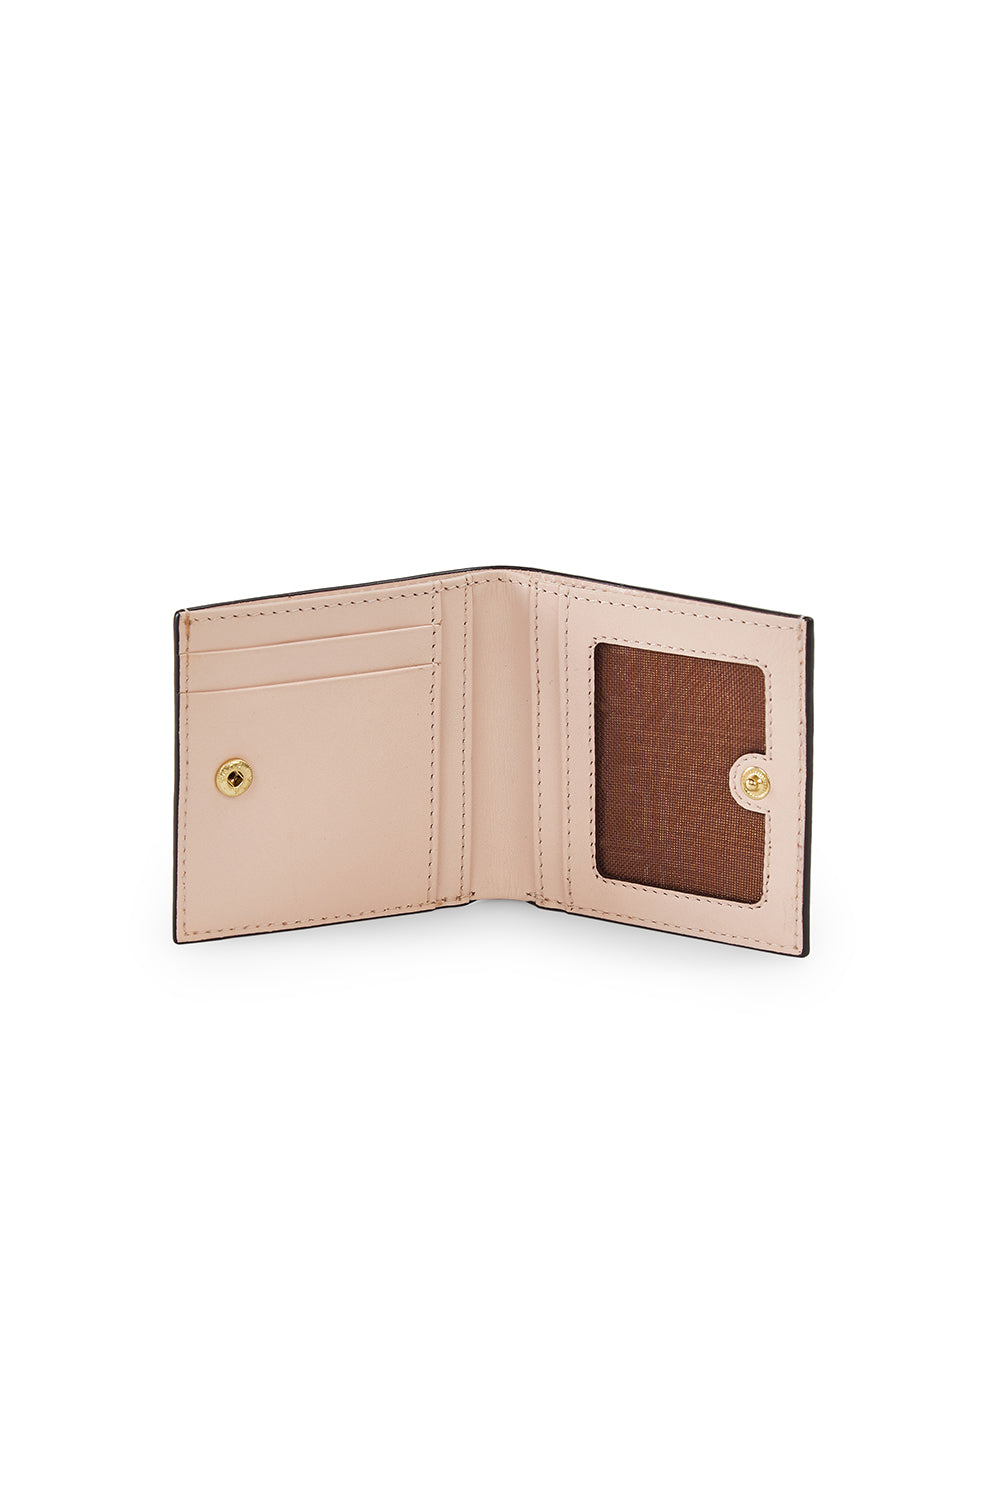 Shop Julia Compact Wallet | Lodis 